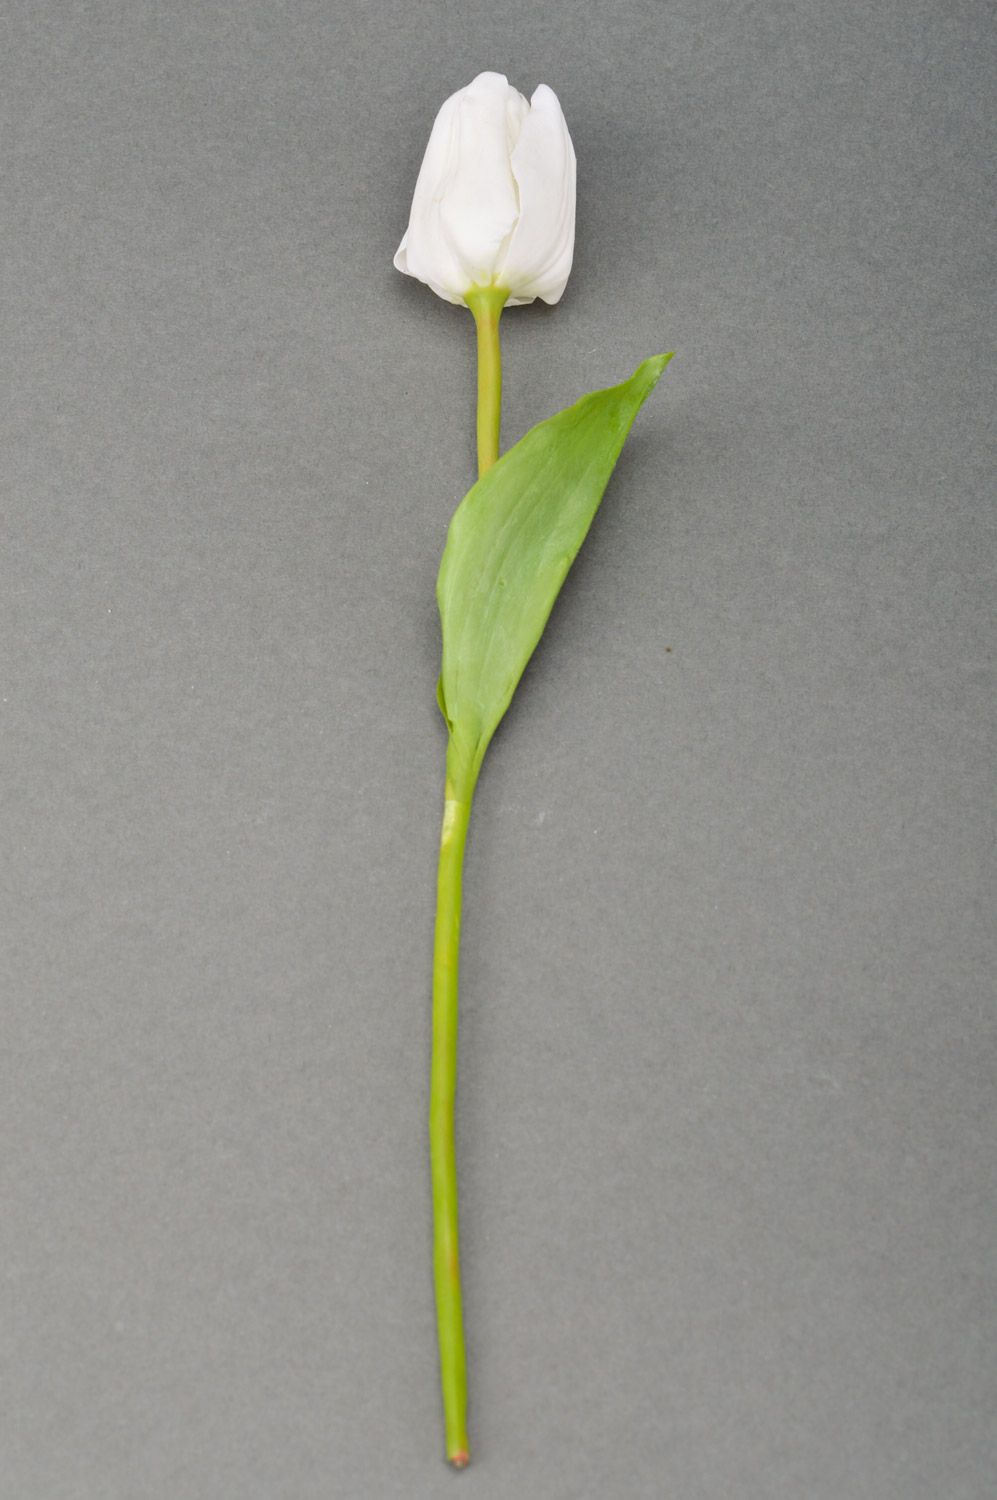 Tulipe blanche artificielle en pâte polymère originale faite main avec emballage photo 3